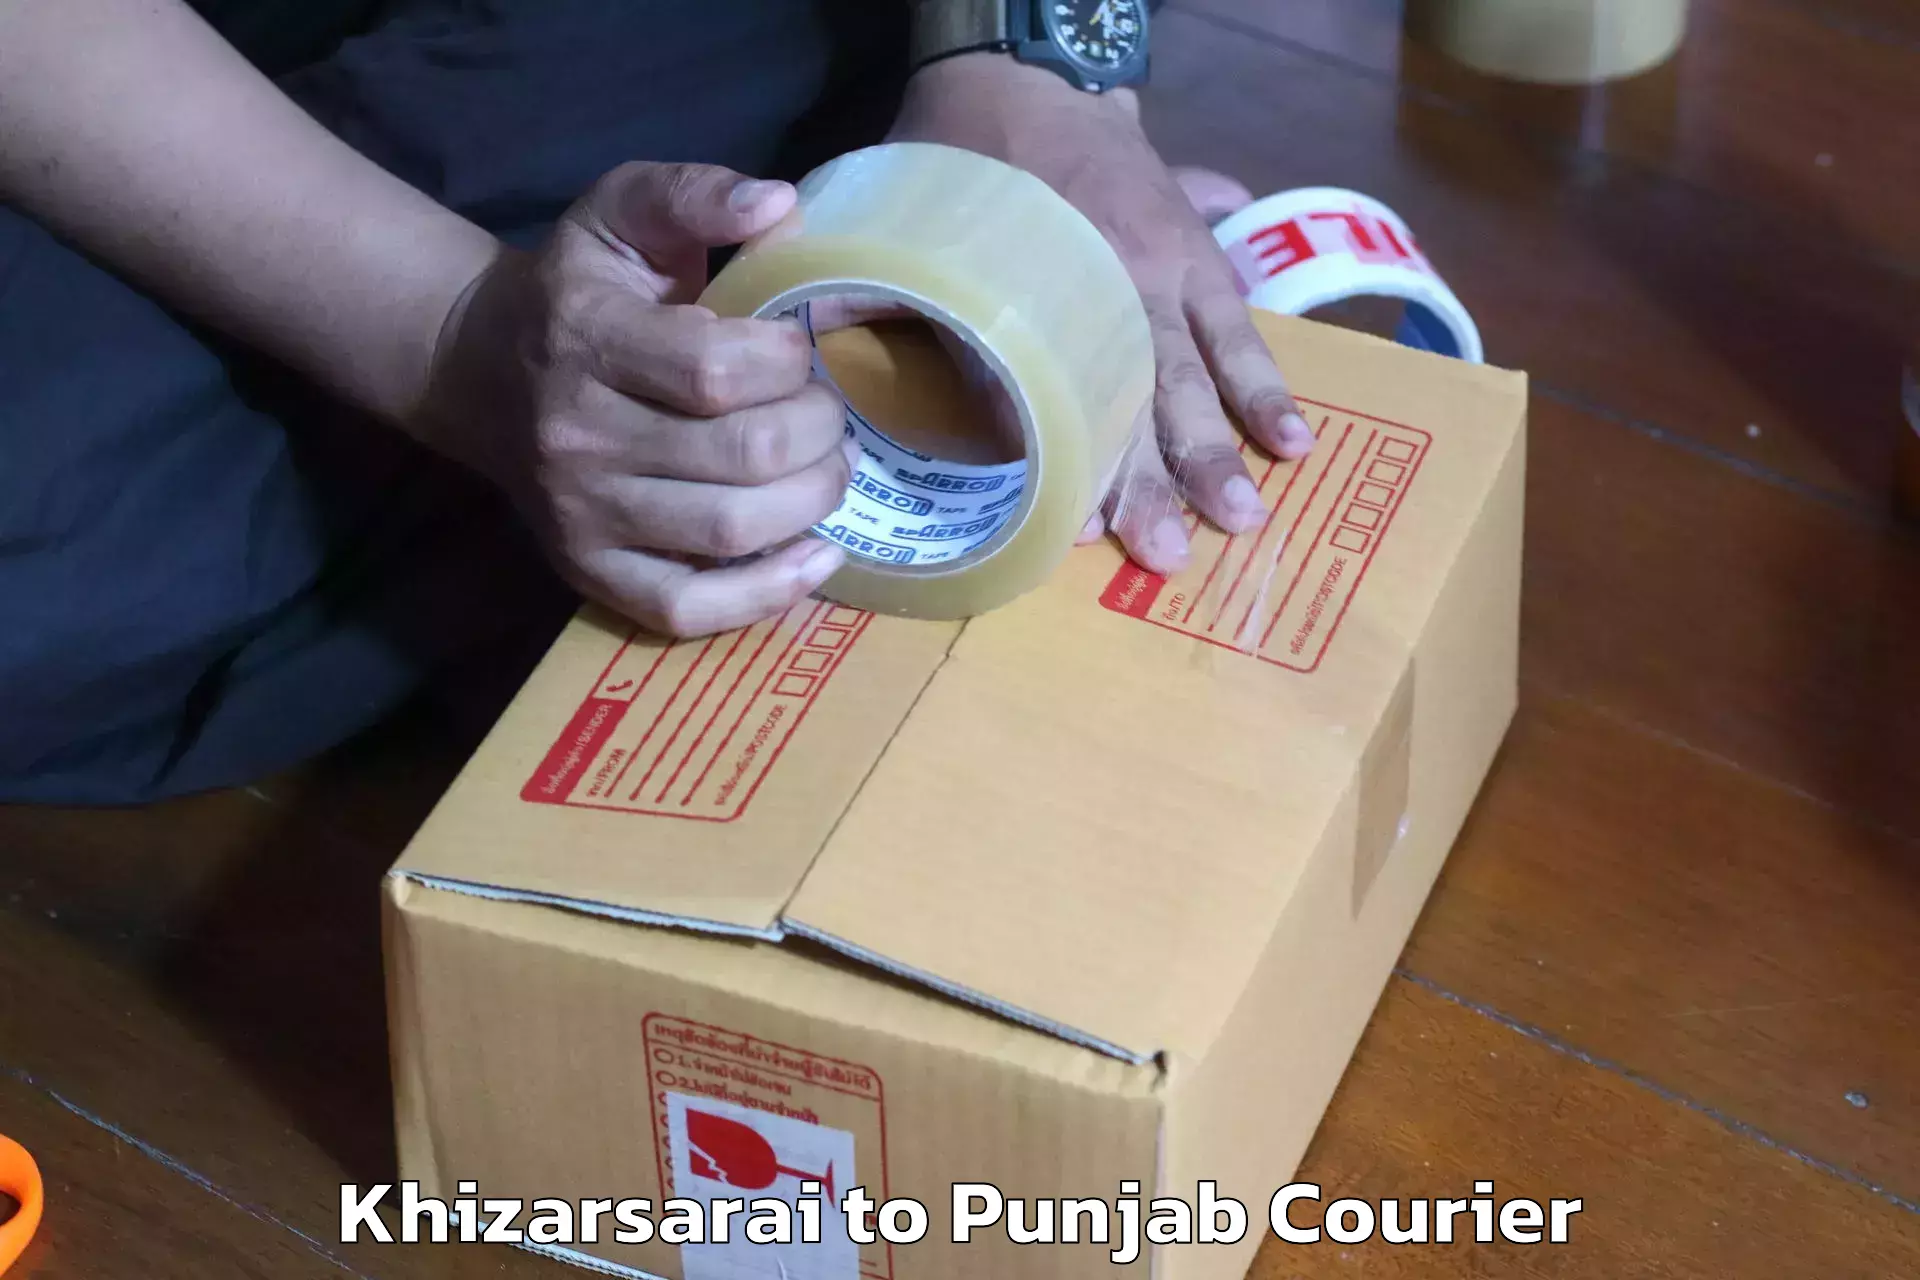 Professional moving company Khizarsarai to Jalandhar